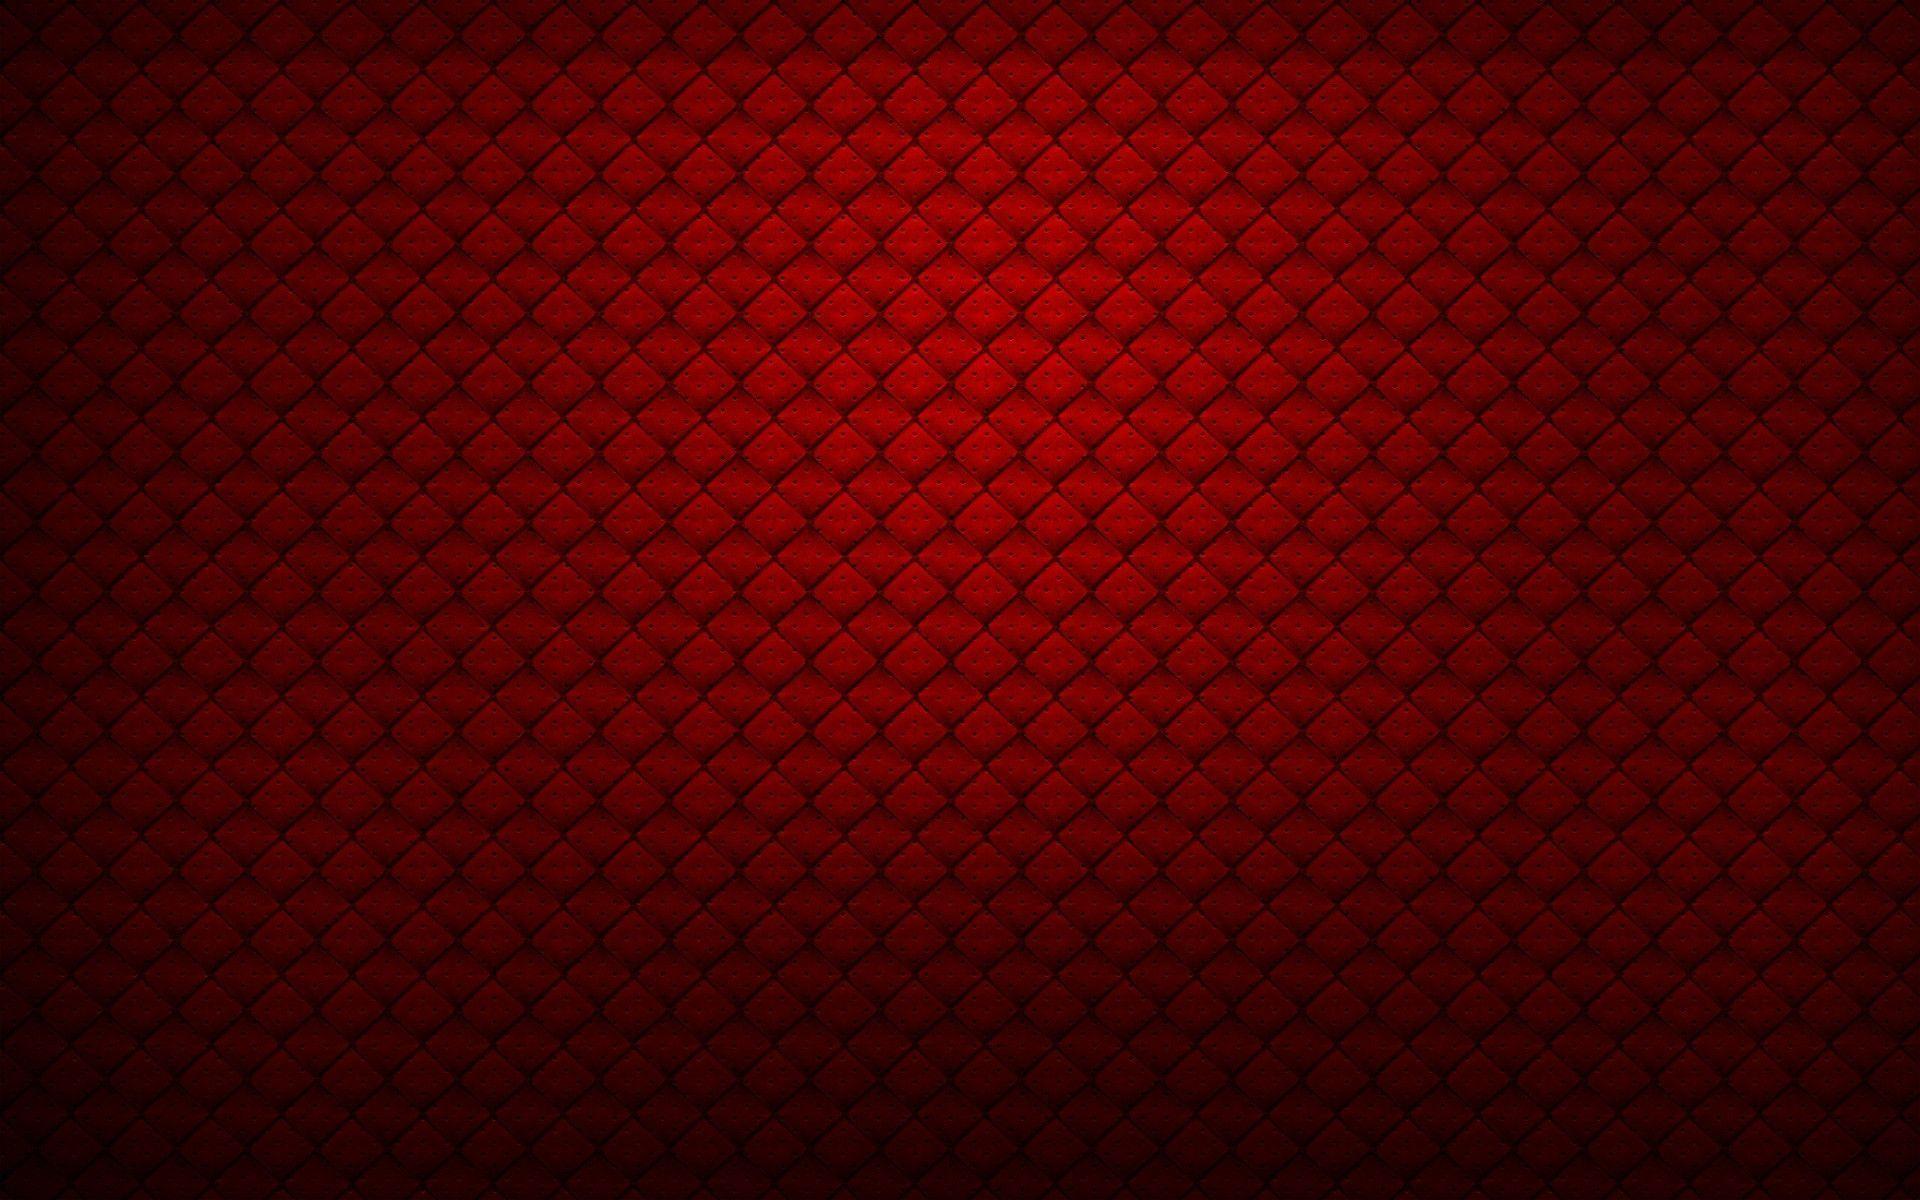 Red Circle Wallpaper 19022 1920x1200 px